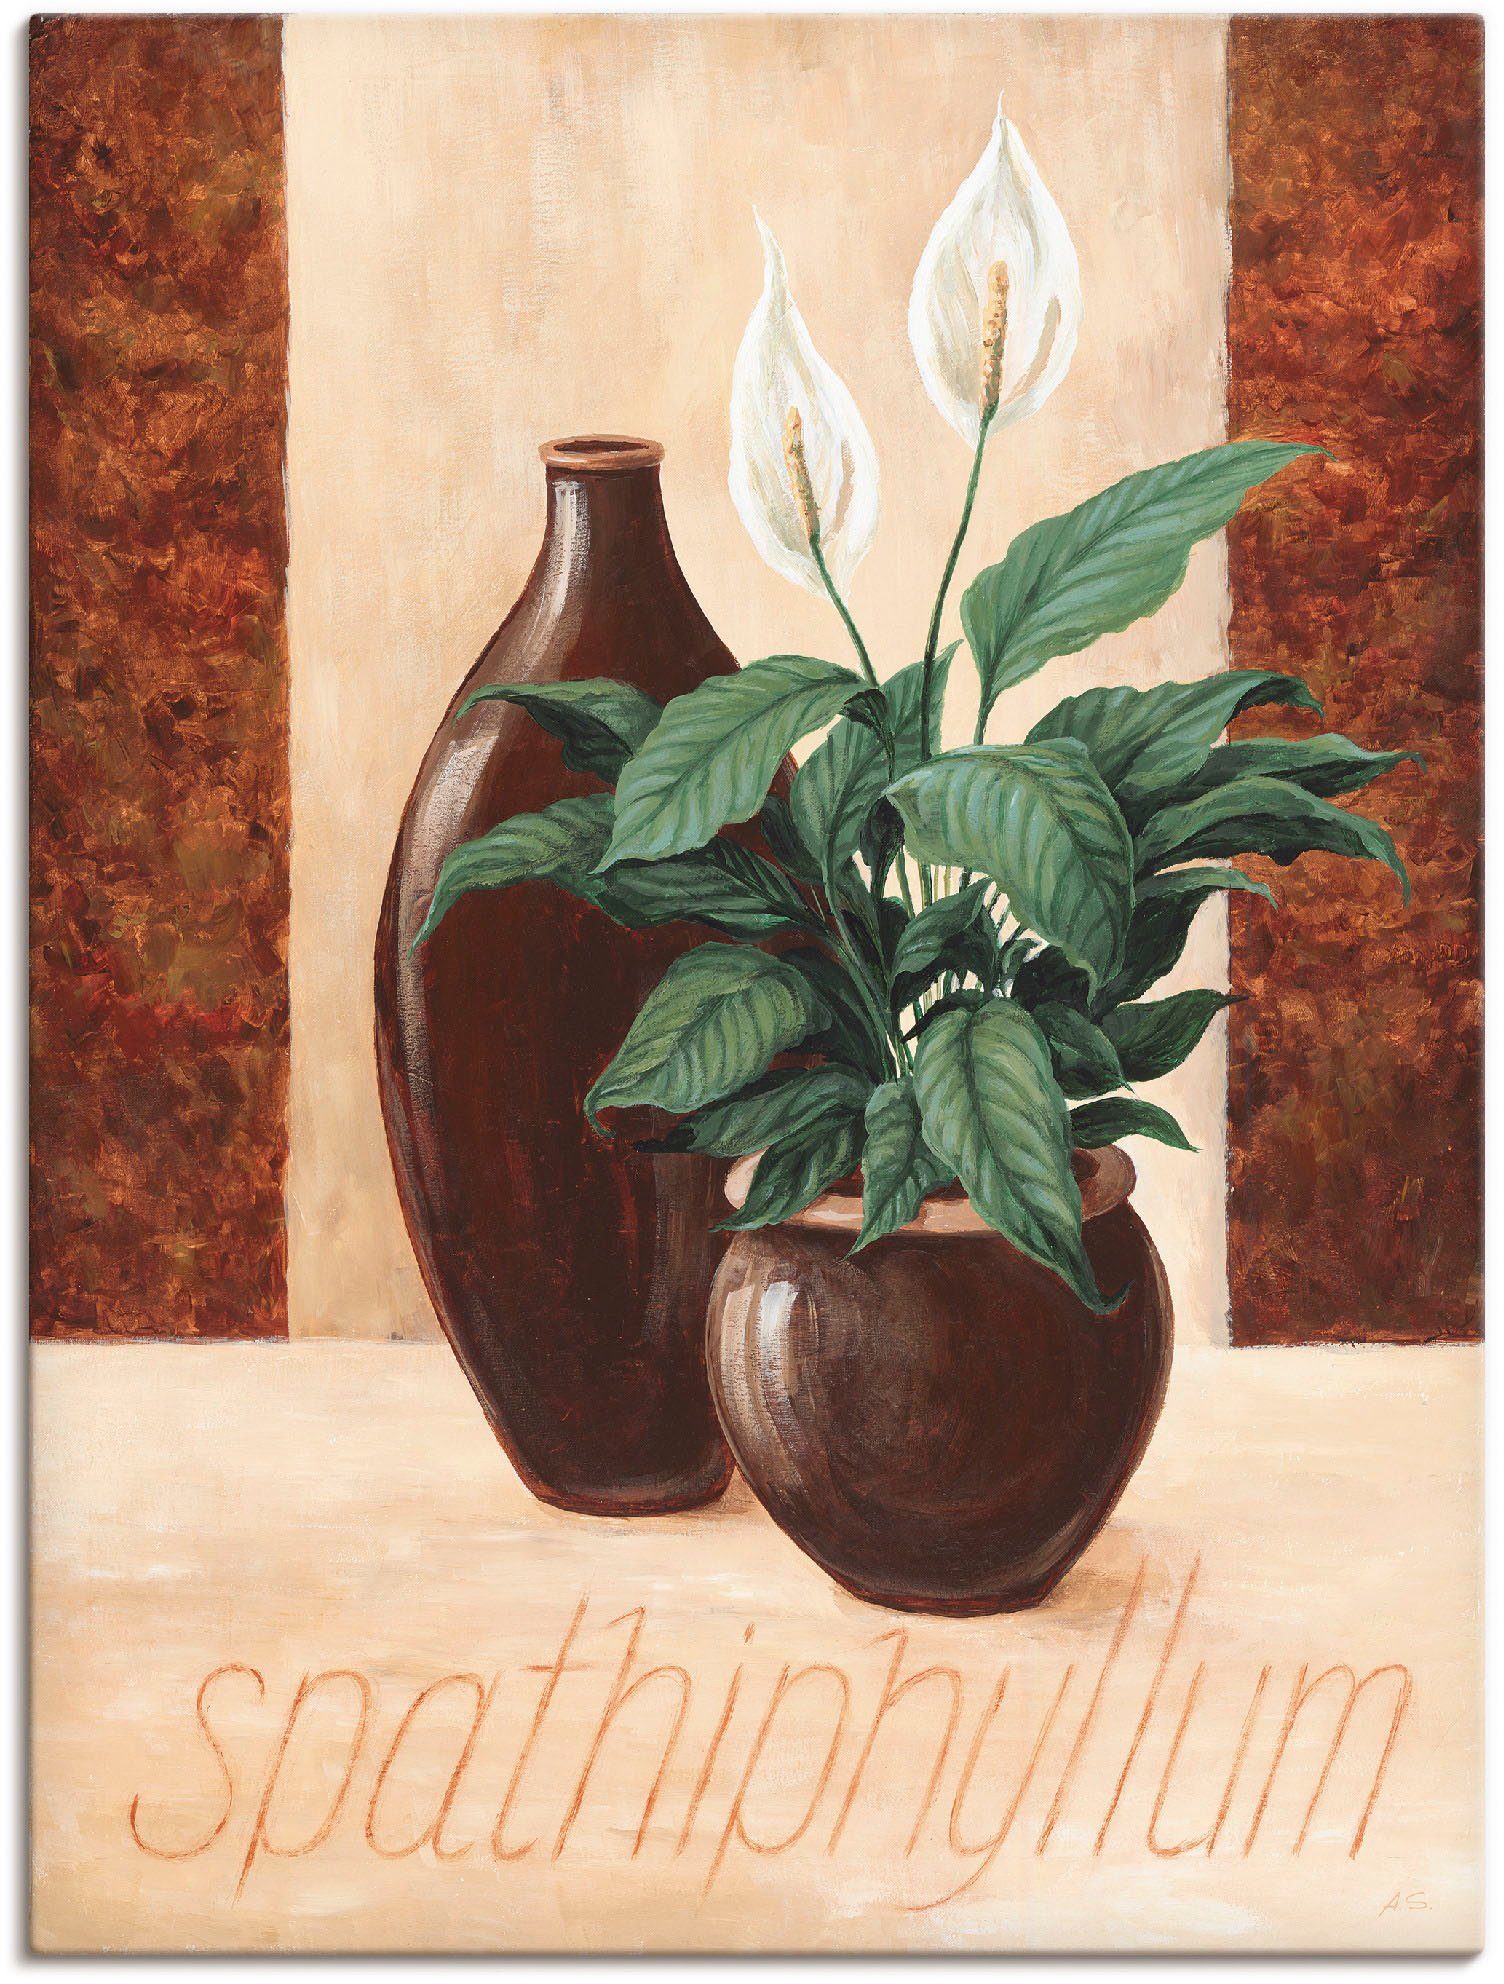 Artland Artprint Spathiphyllum - Einblatt in vele afmetingen & productsoorten - artprint van aluminium / artprint voor buiten, artprint op linnen, poster, muursticker / wandfolie o